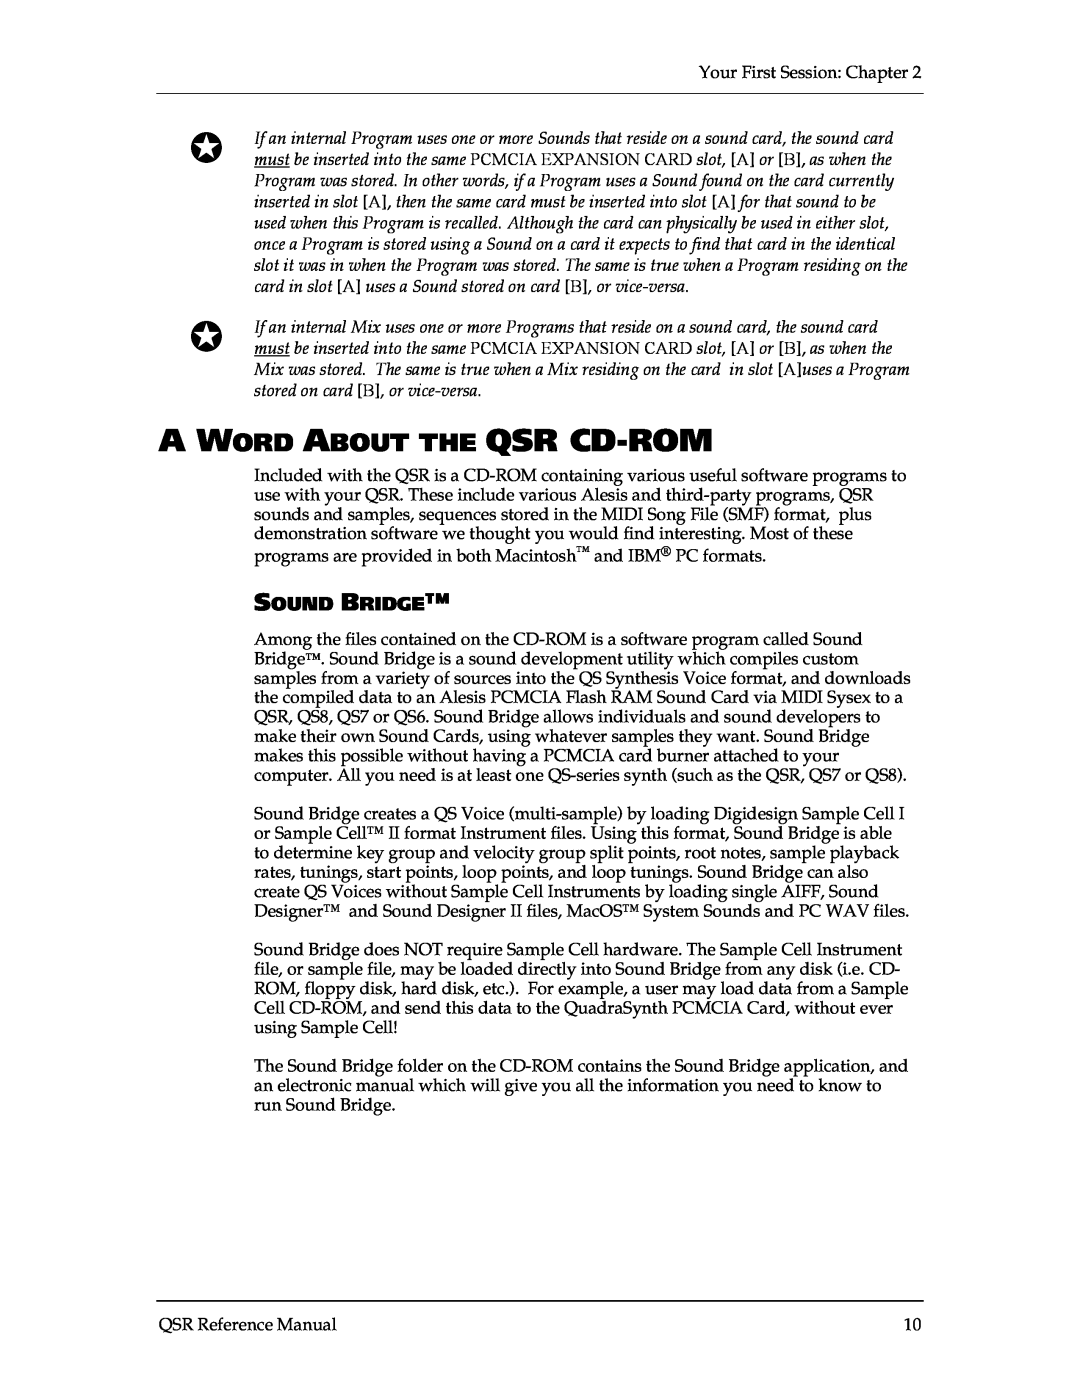 Alesis QSR 64 manual A Word About The Qsr Cd-Rom, Sound Bridge 